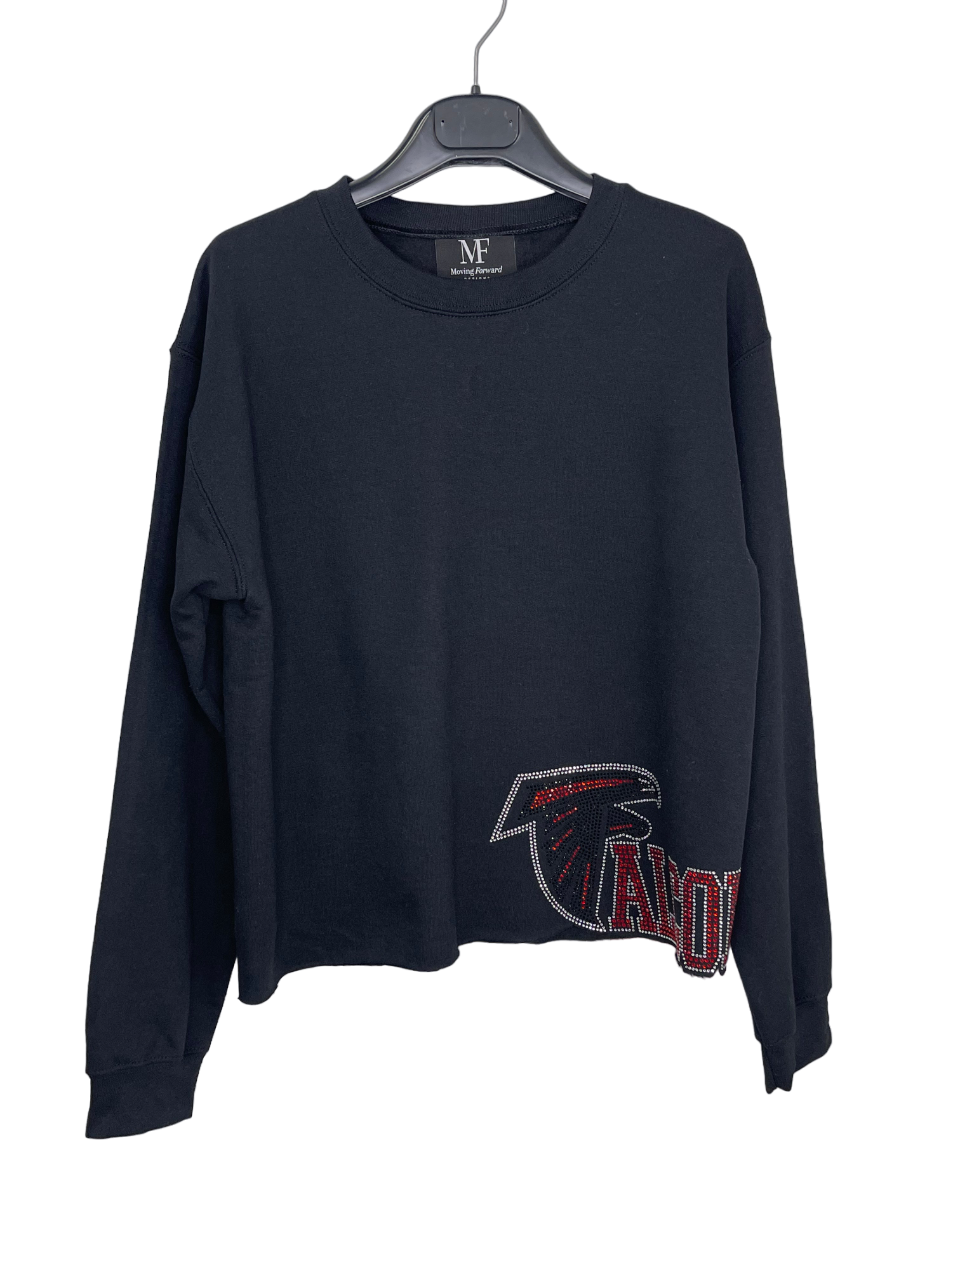 Game Day Sweatshirt, Crewneck Black, Atlanta Falcons